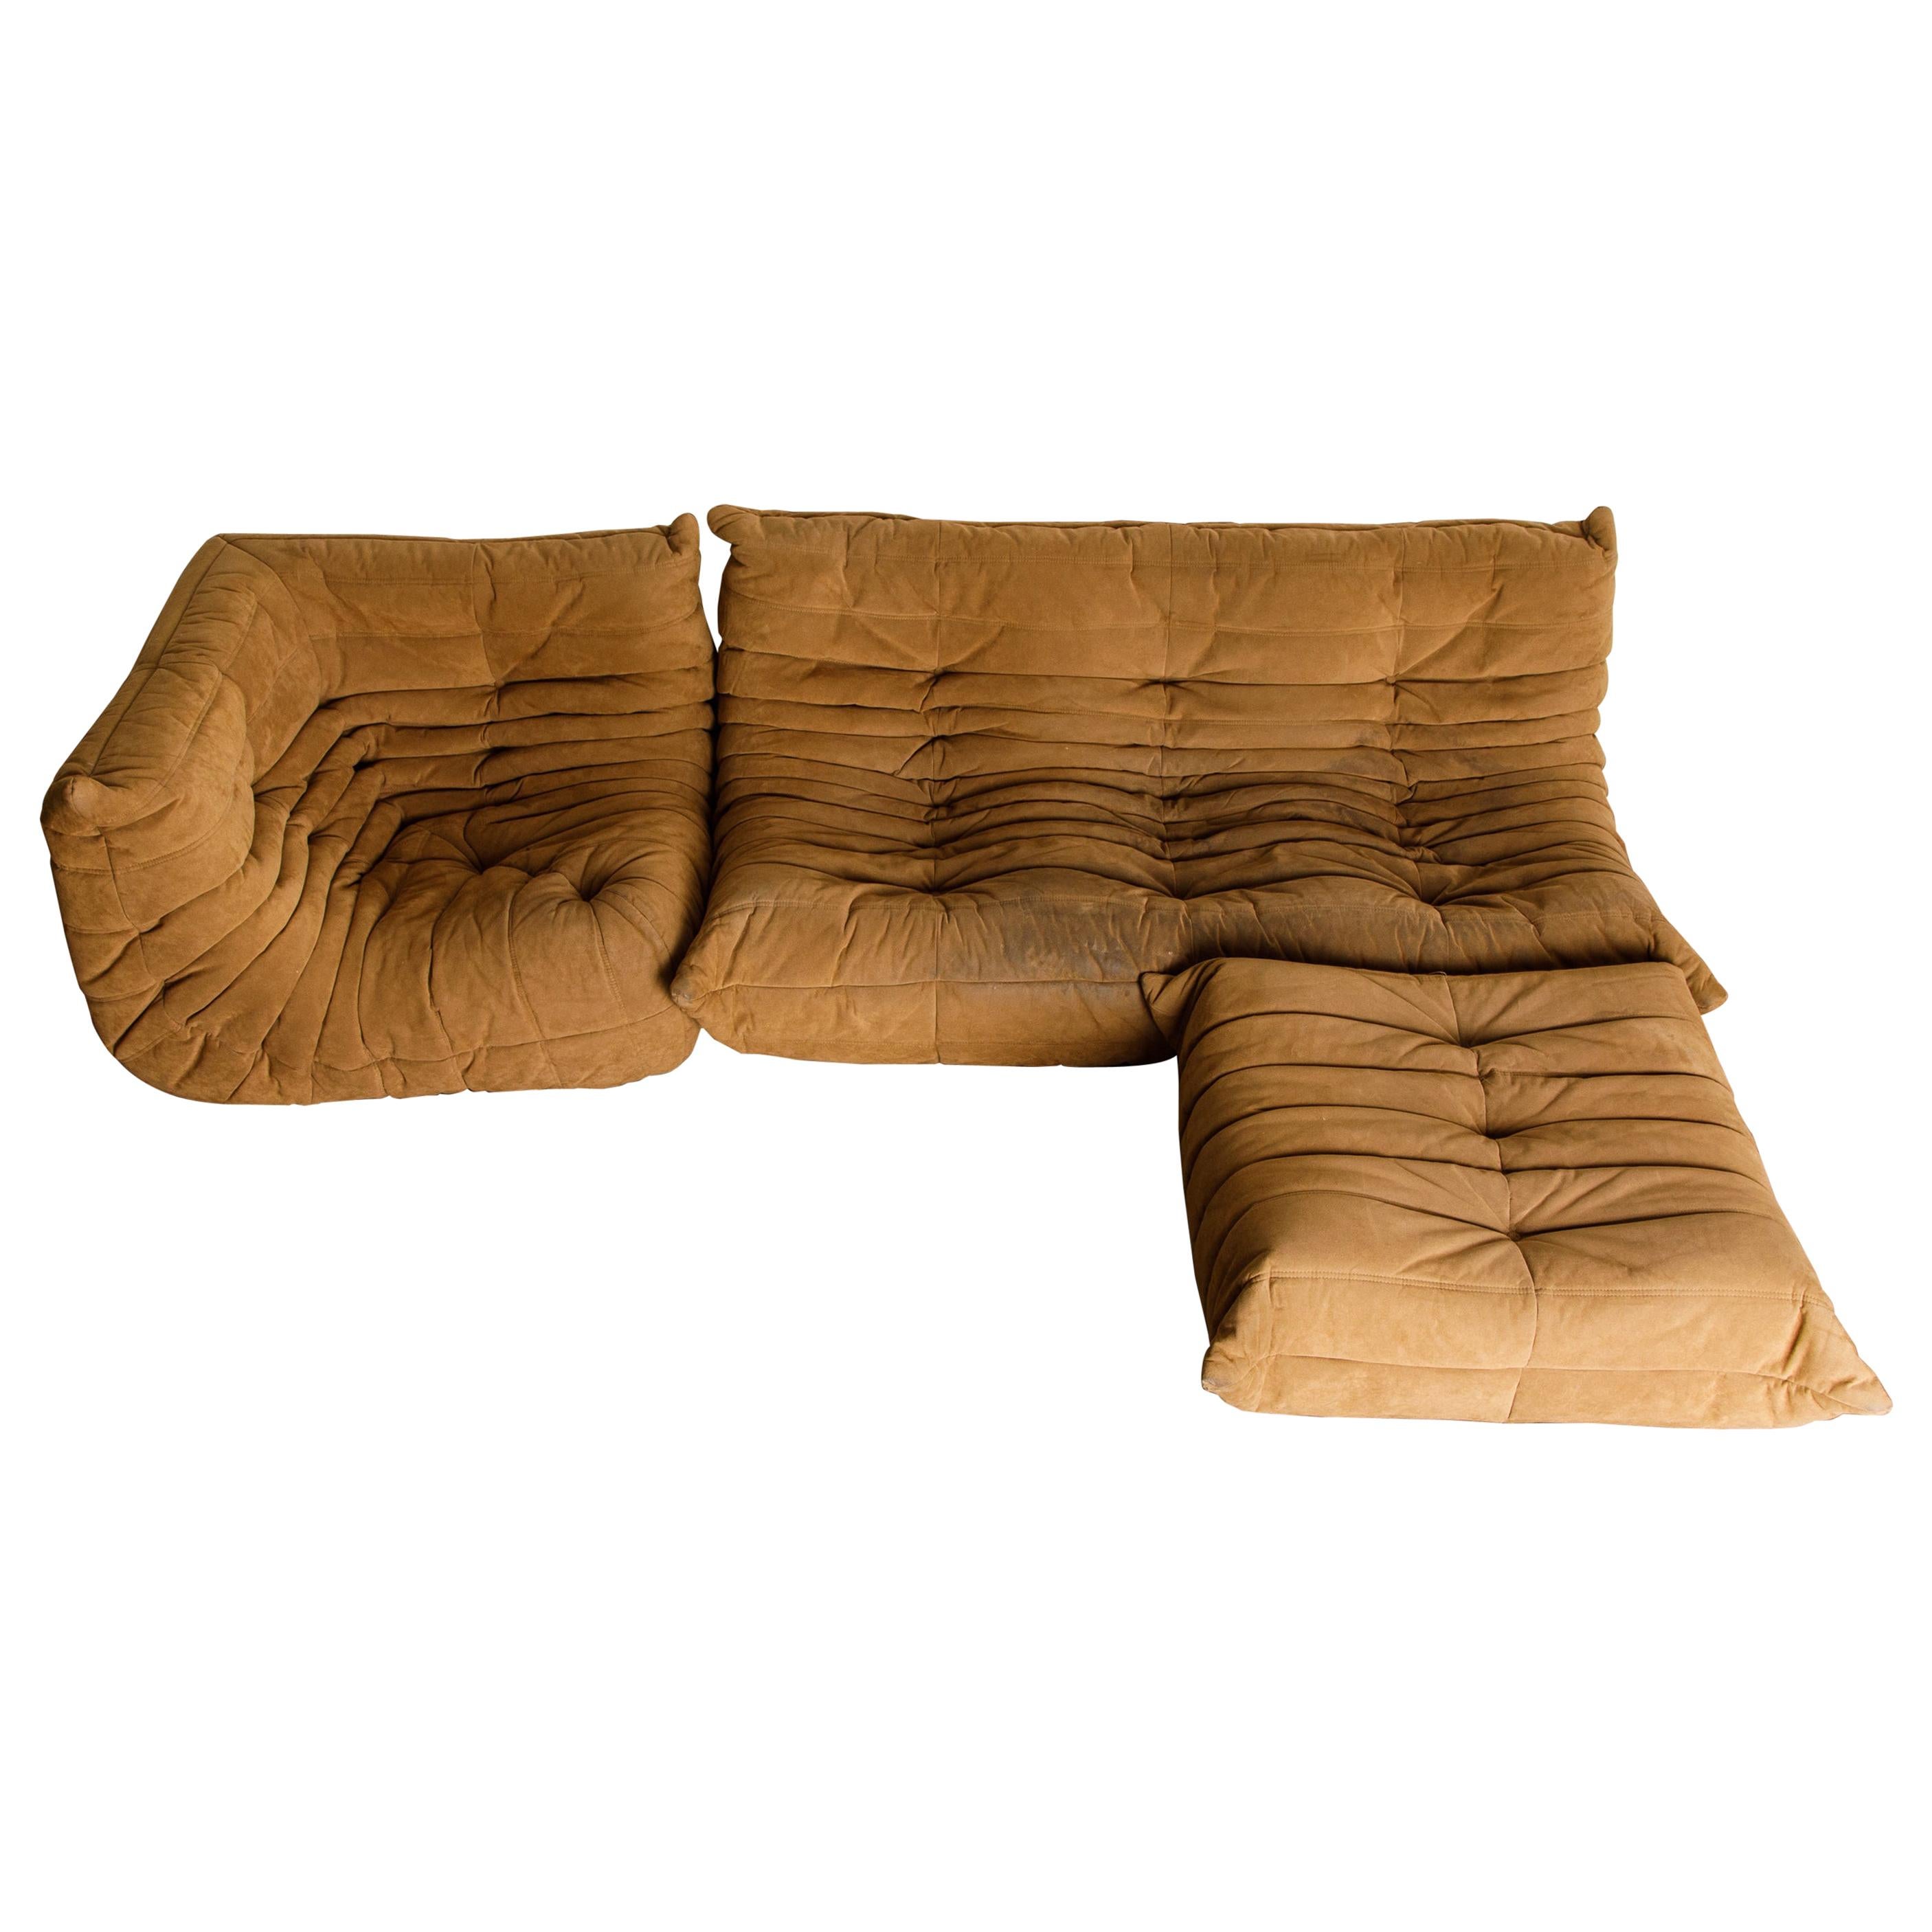 'Togo' Sectional Sofa Set by Michel Ducaroy for Ligne Roset, Signed